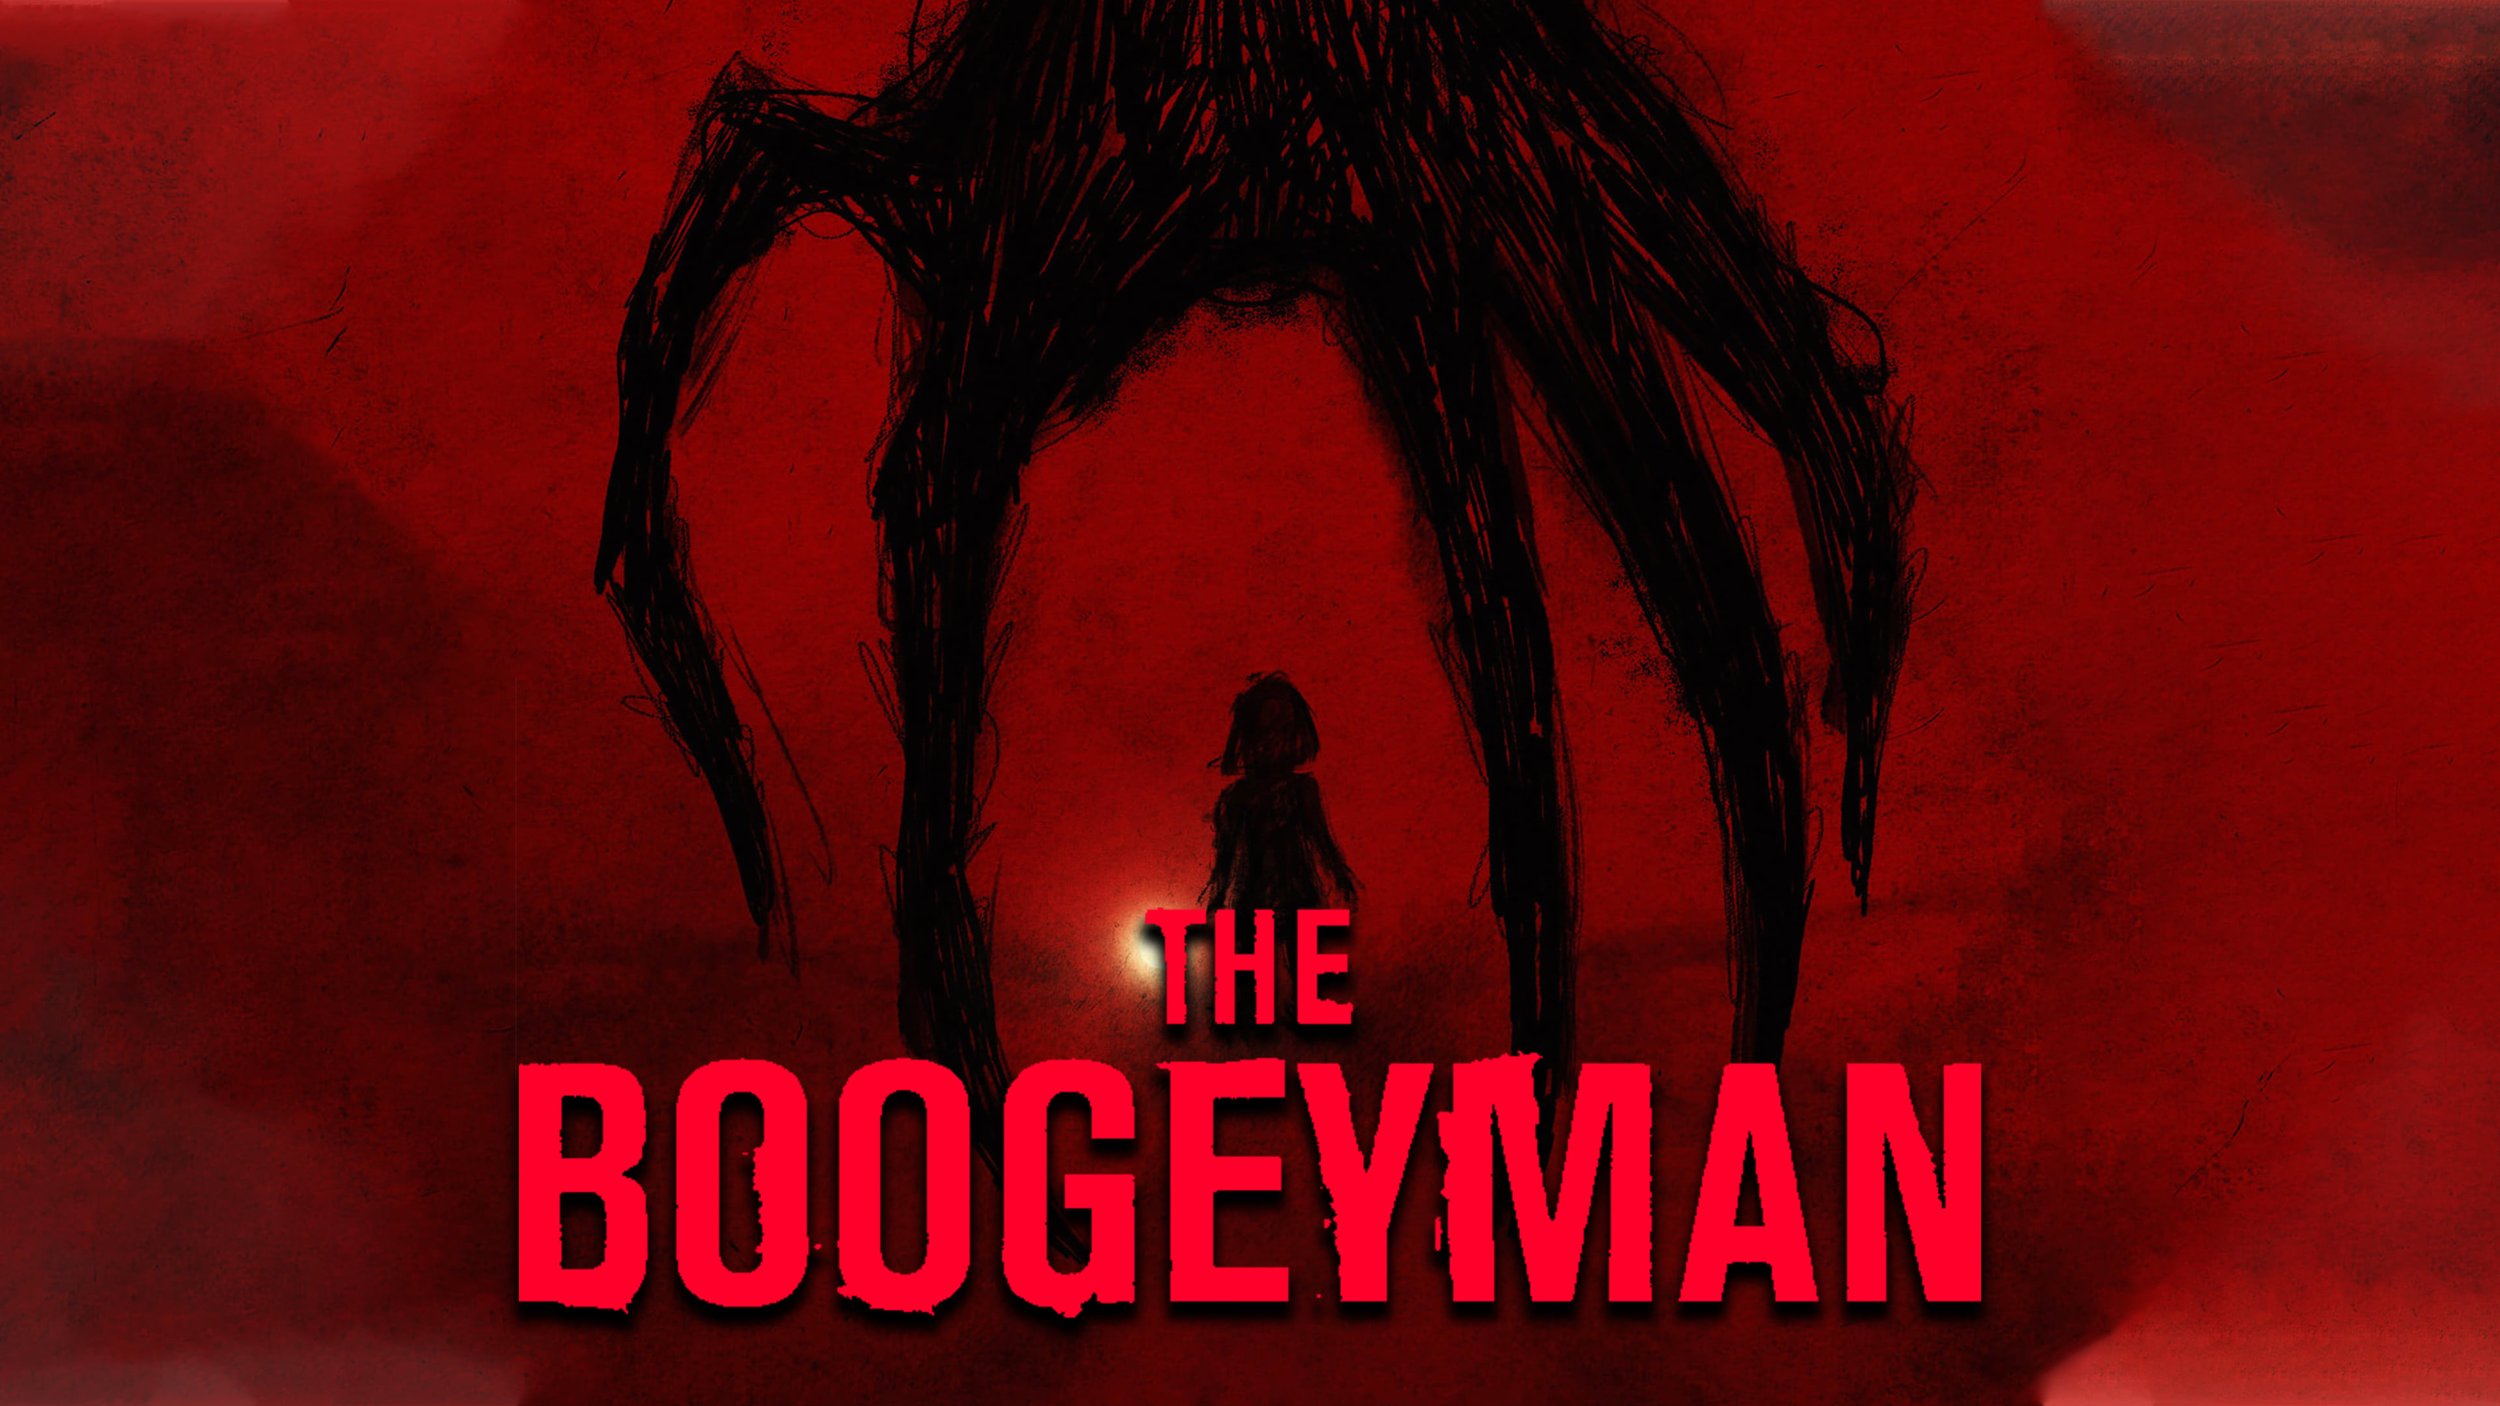 THE BOOGEYMAN